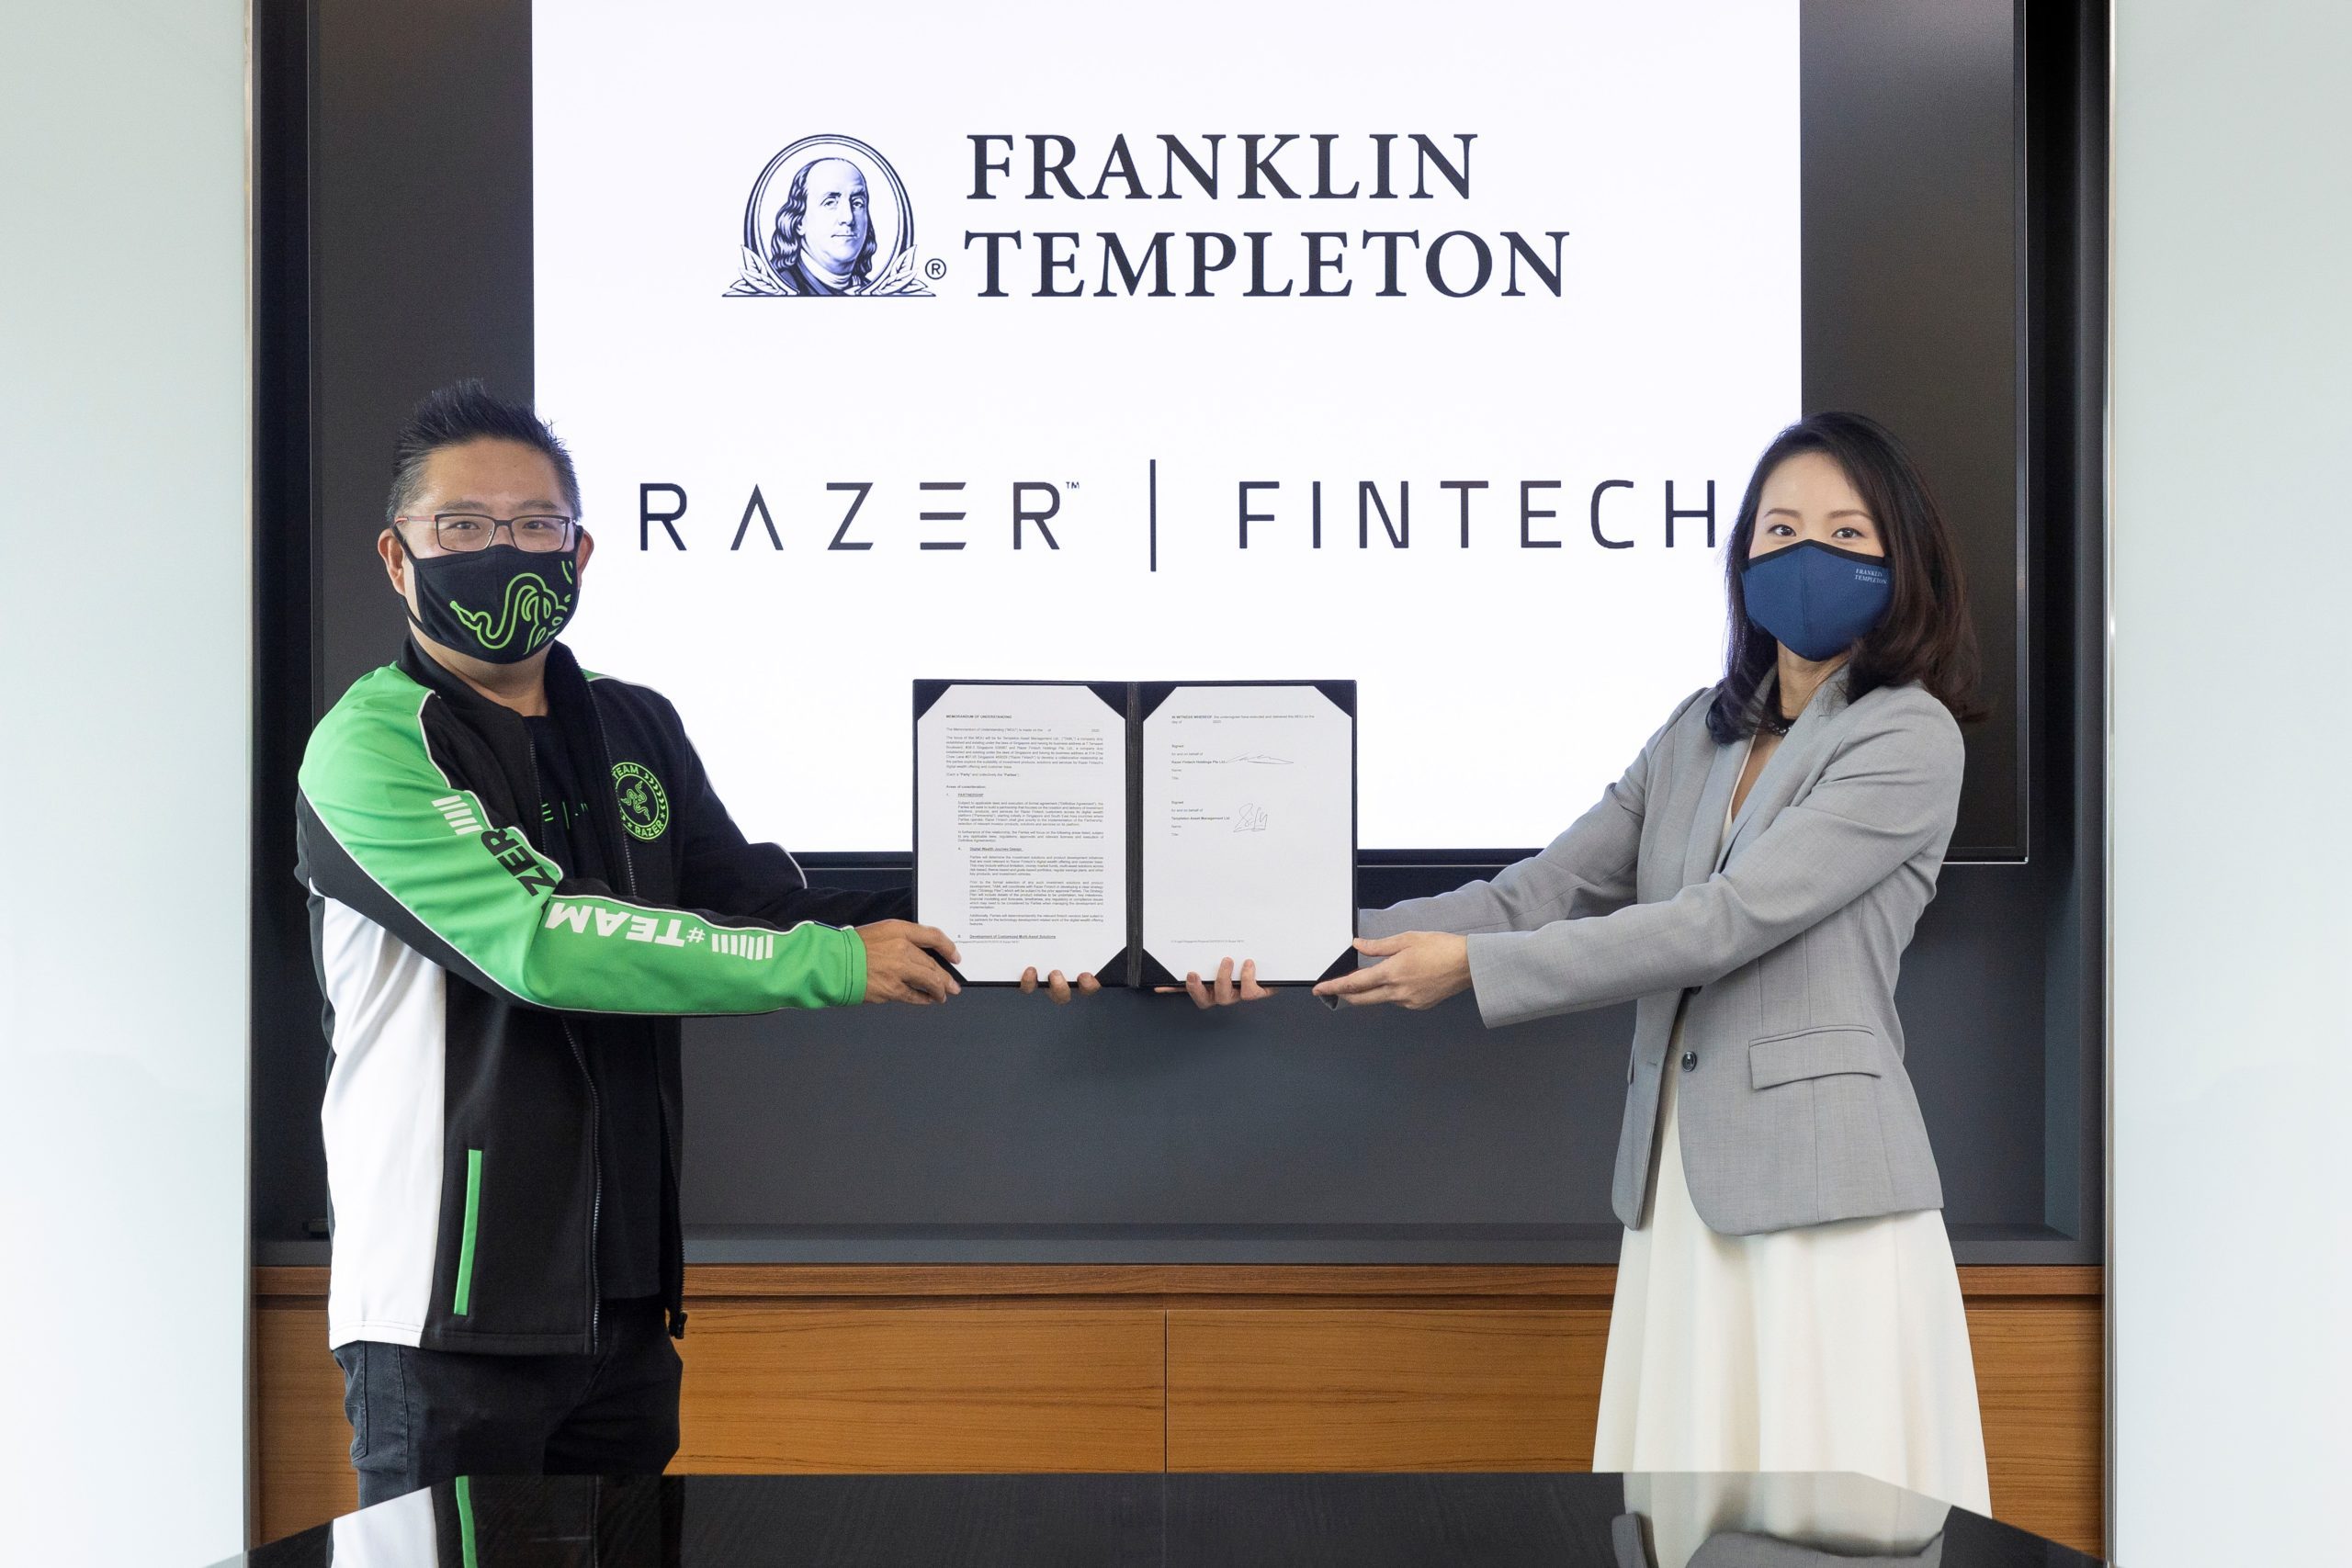 Franklin Templeton, Razer Fintech to create digital wealth management platform for youth